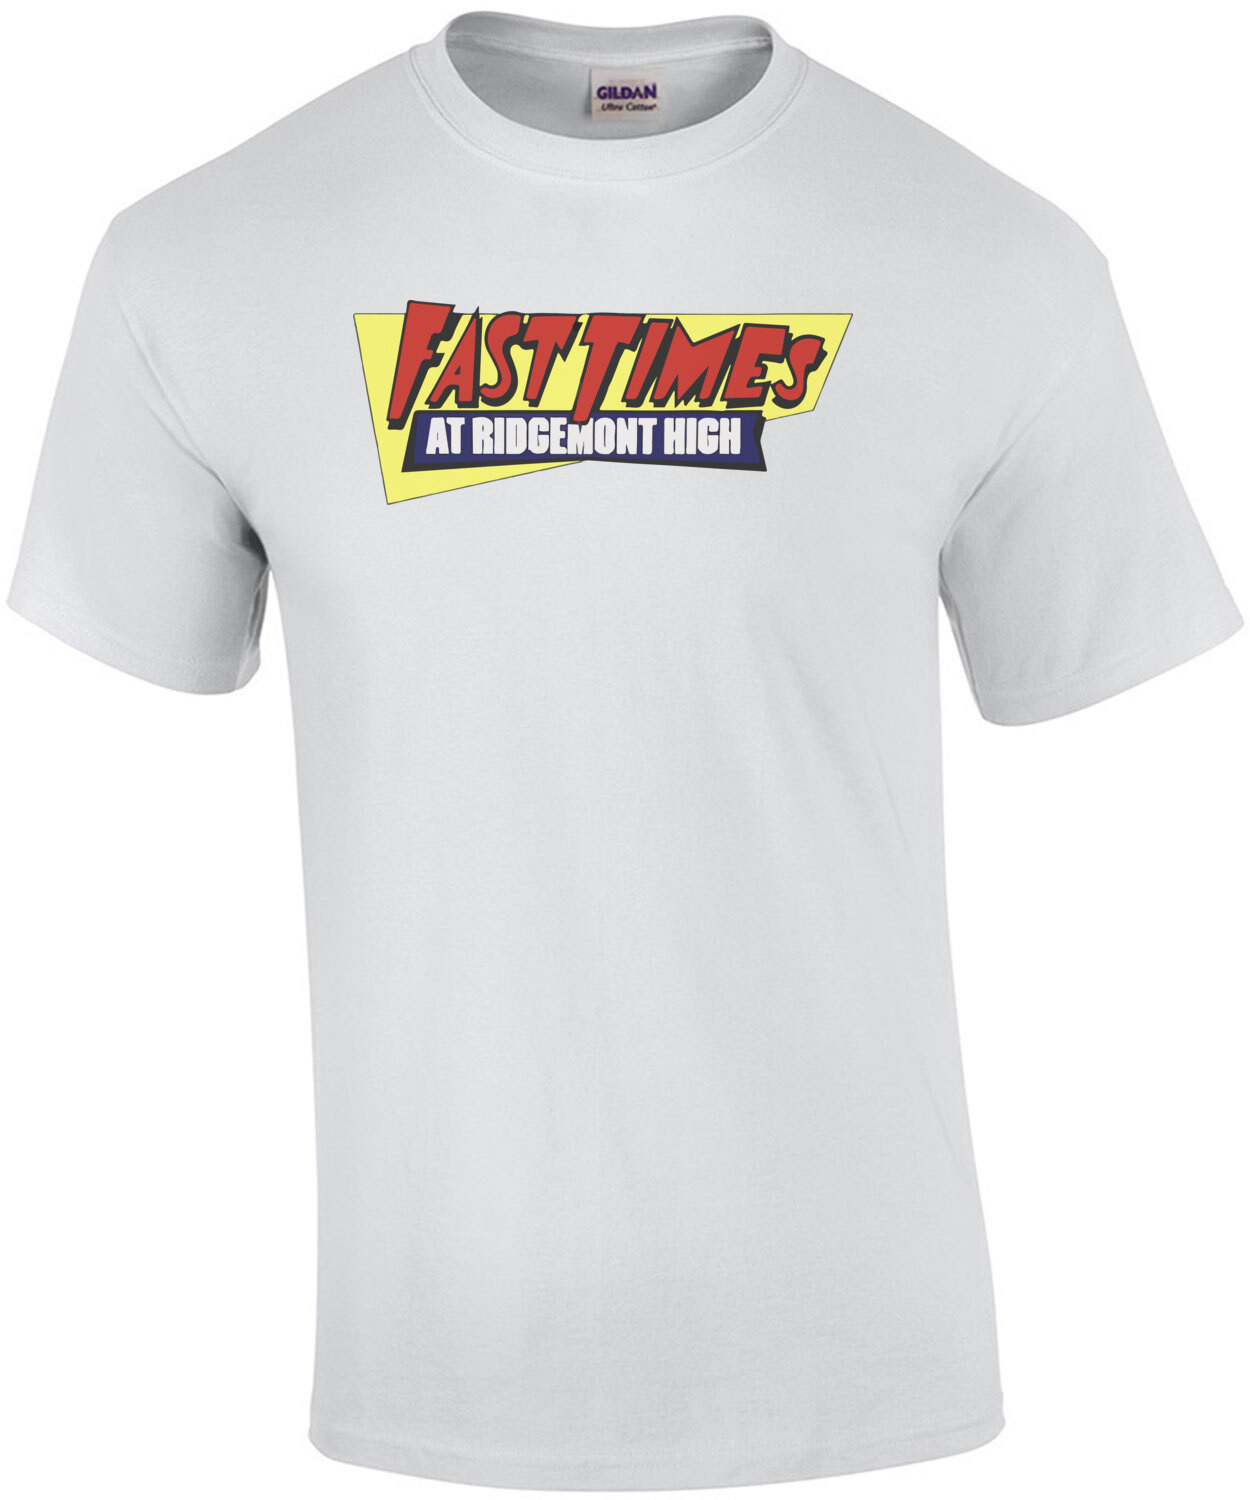 Fast Times at Ridgemont High - 80's T-Shirt